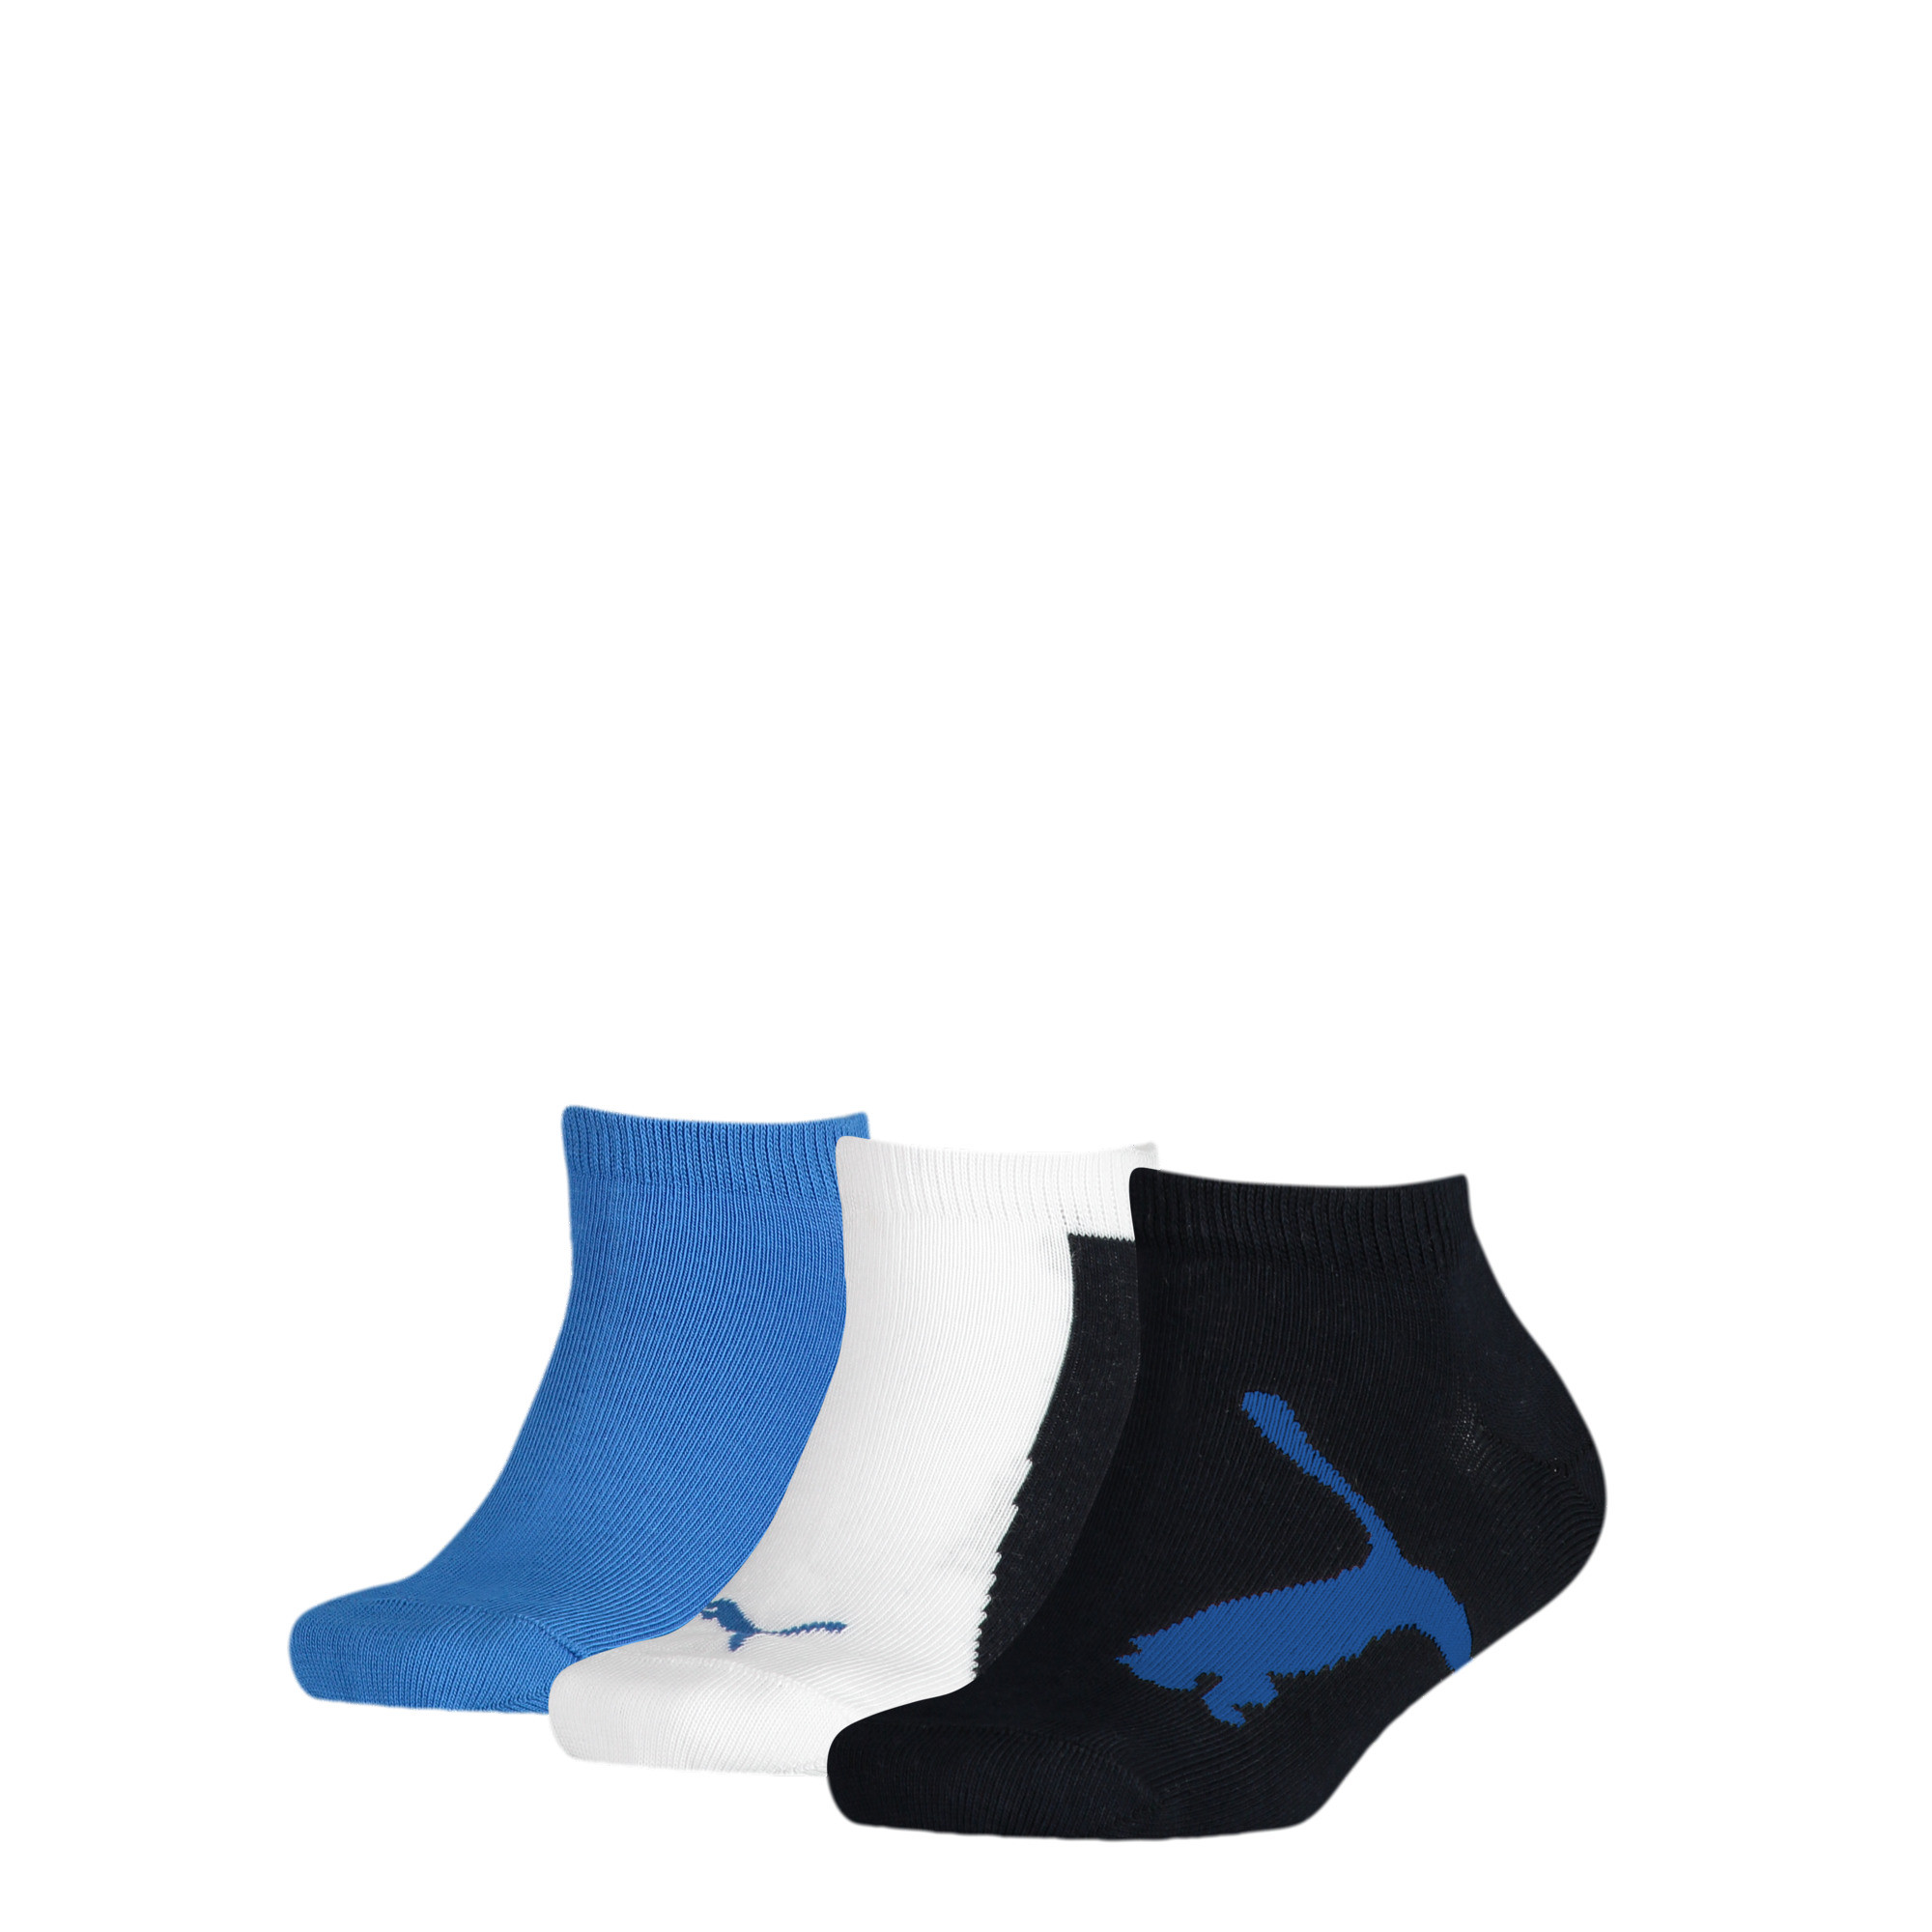 Kids' PUMA BWT Sneaker - Trainer Socks 3 Pack In Navy/White/Strong Blue, Size 35-38